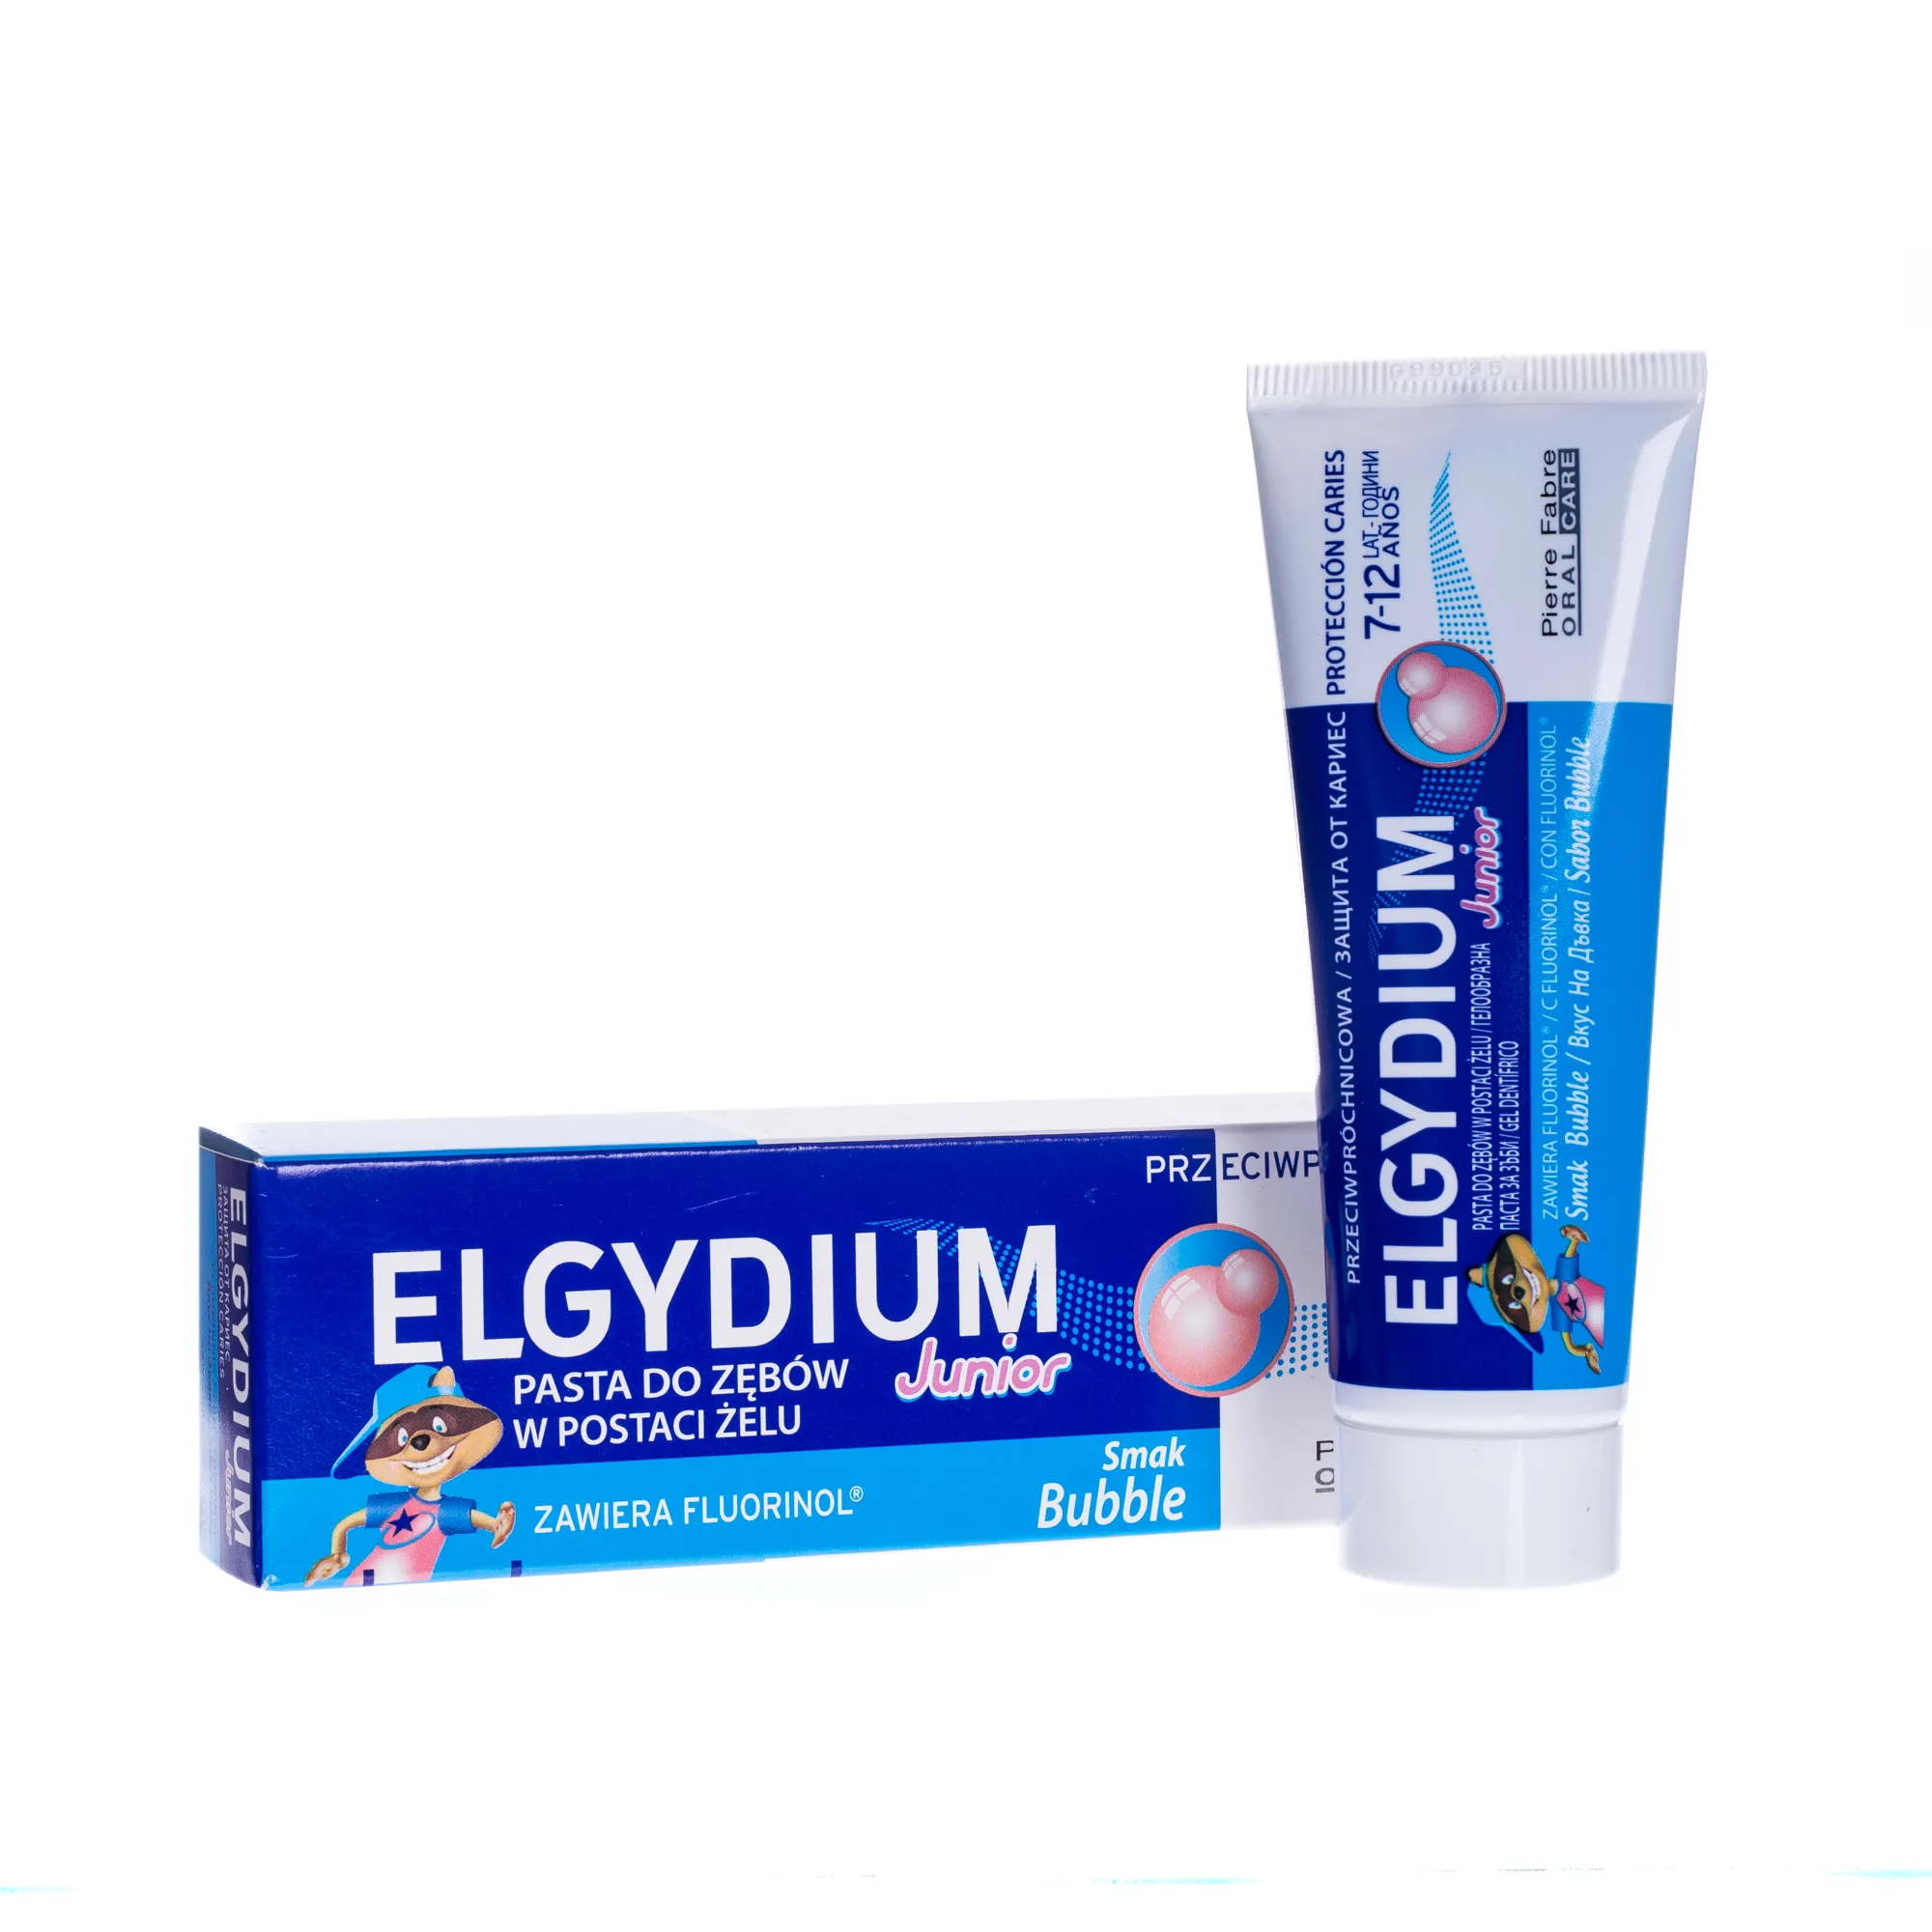 Elgydium Junior, przeciwpróchnicowa pasta do zębów 7-12 lat,, smak Bubble, 50 ml 